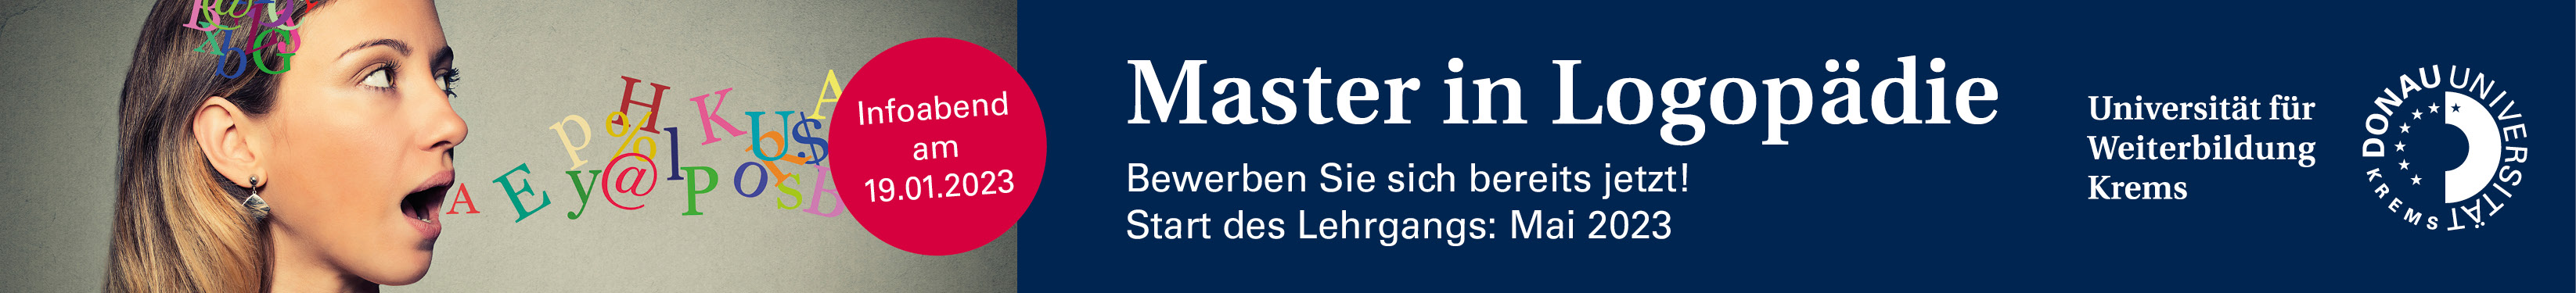 Master in Logopädie